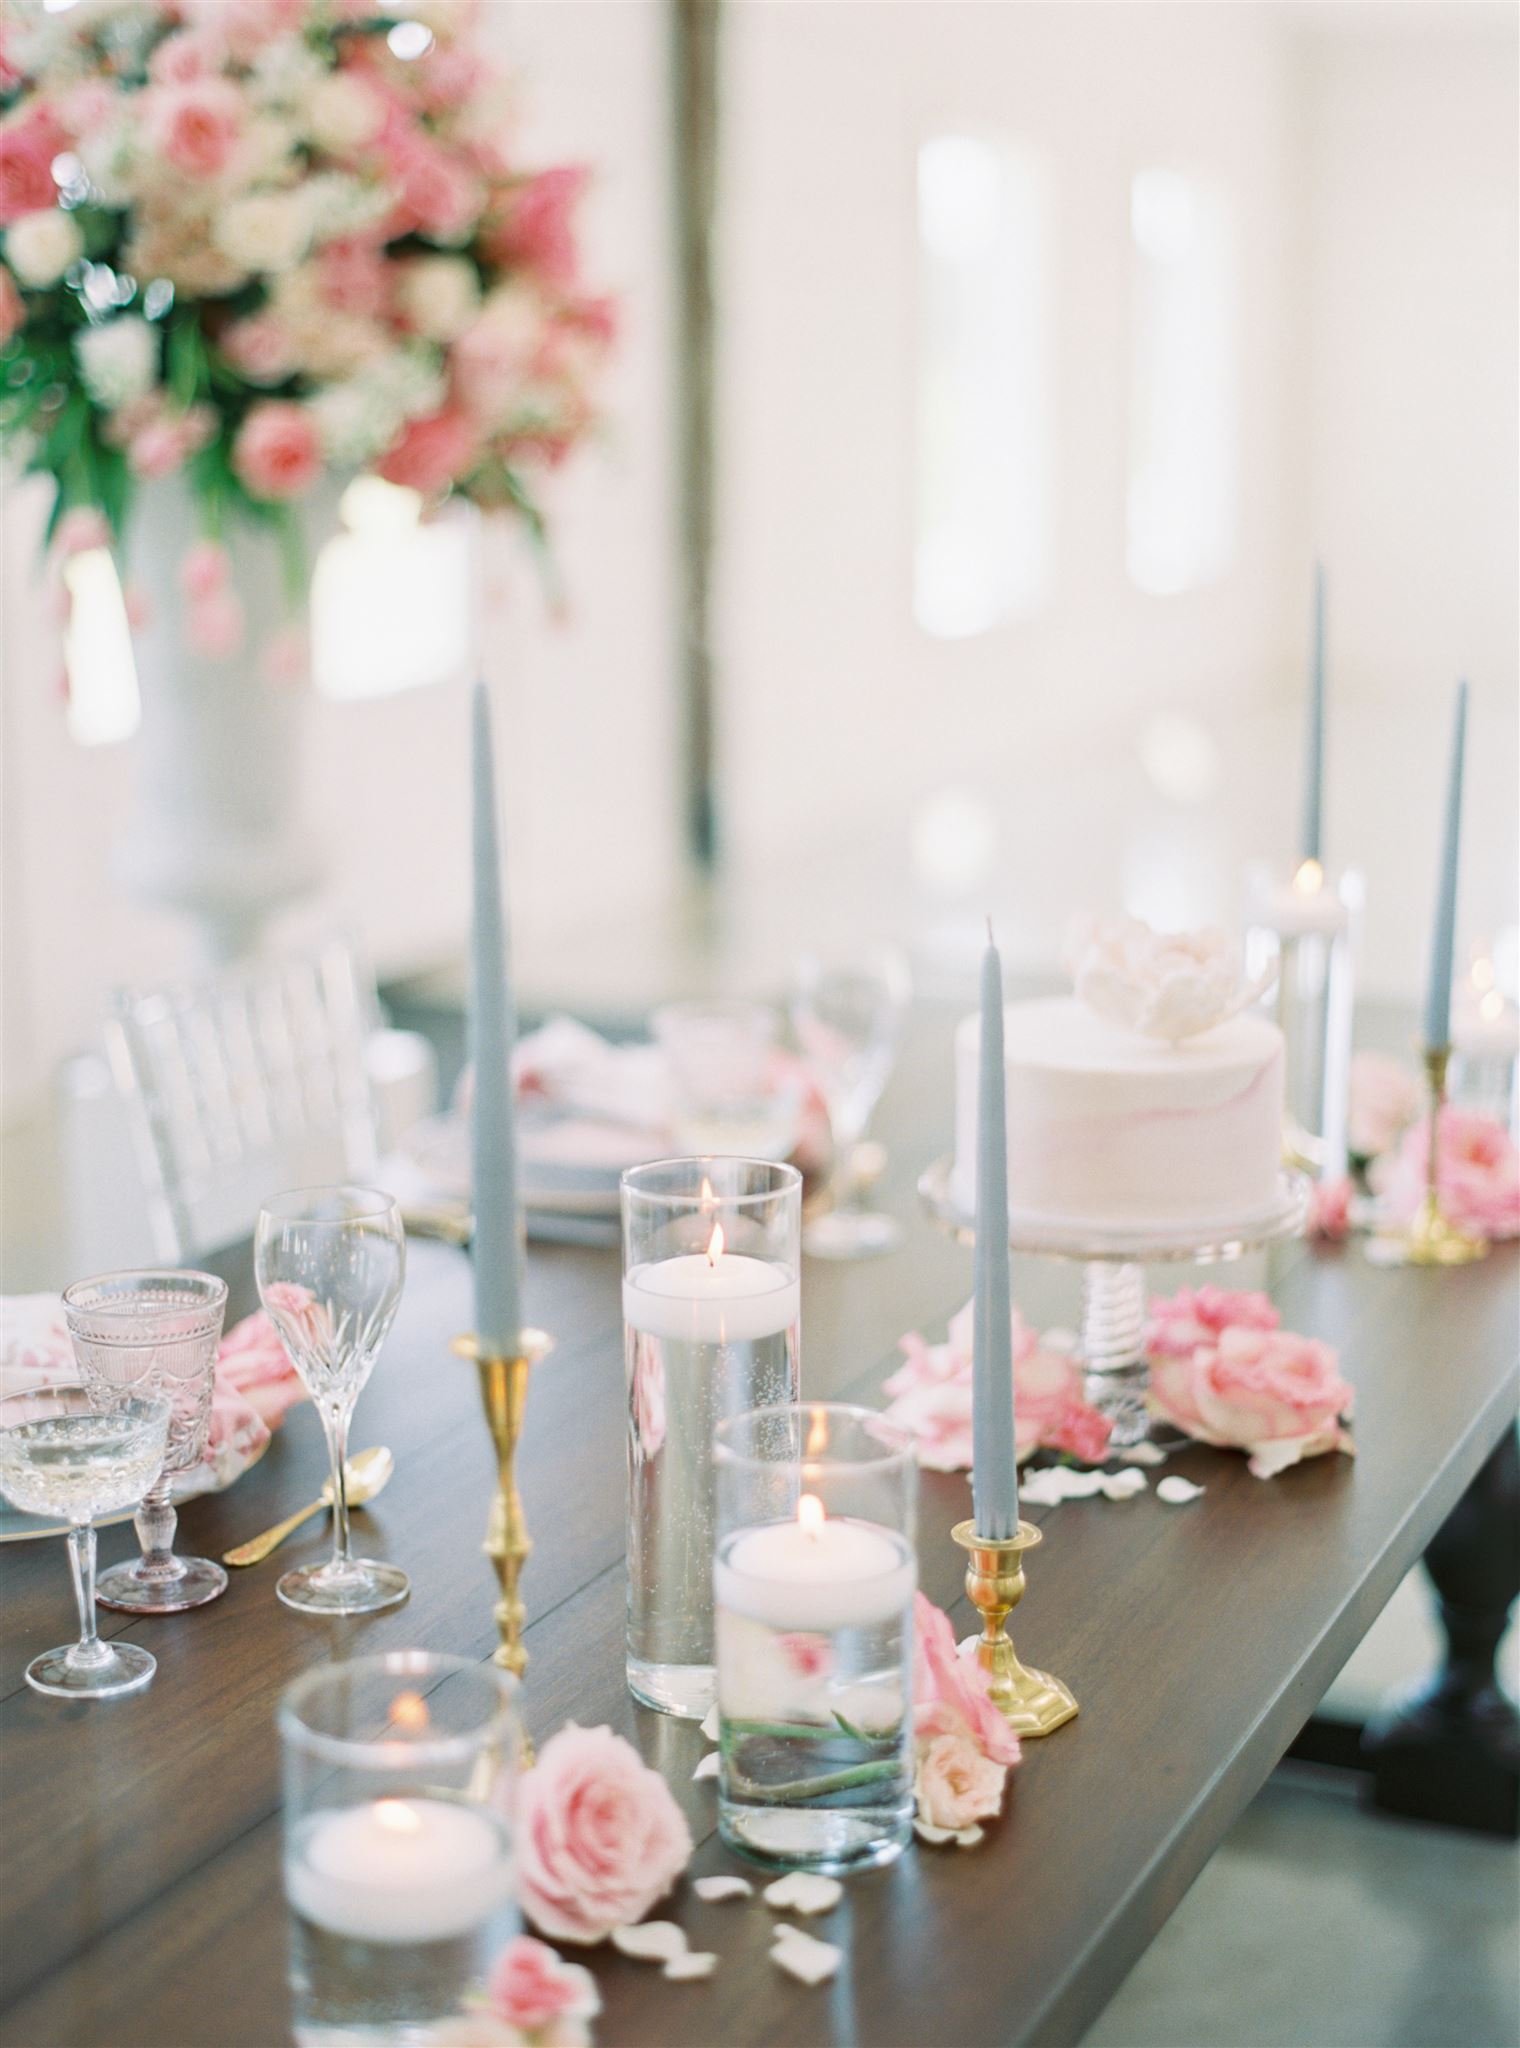 belli-fiori-st-louis-luxury-wedding-florist-head-table-wedding-rochelle-maples-photography-image_11855_10.jpg